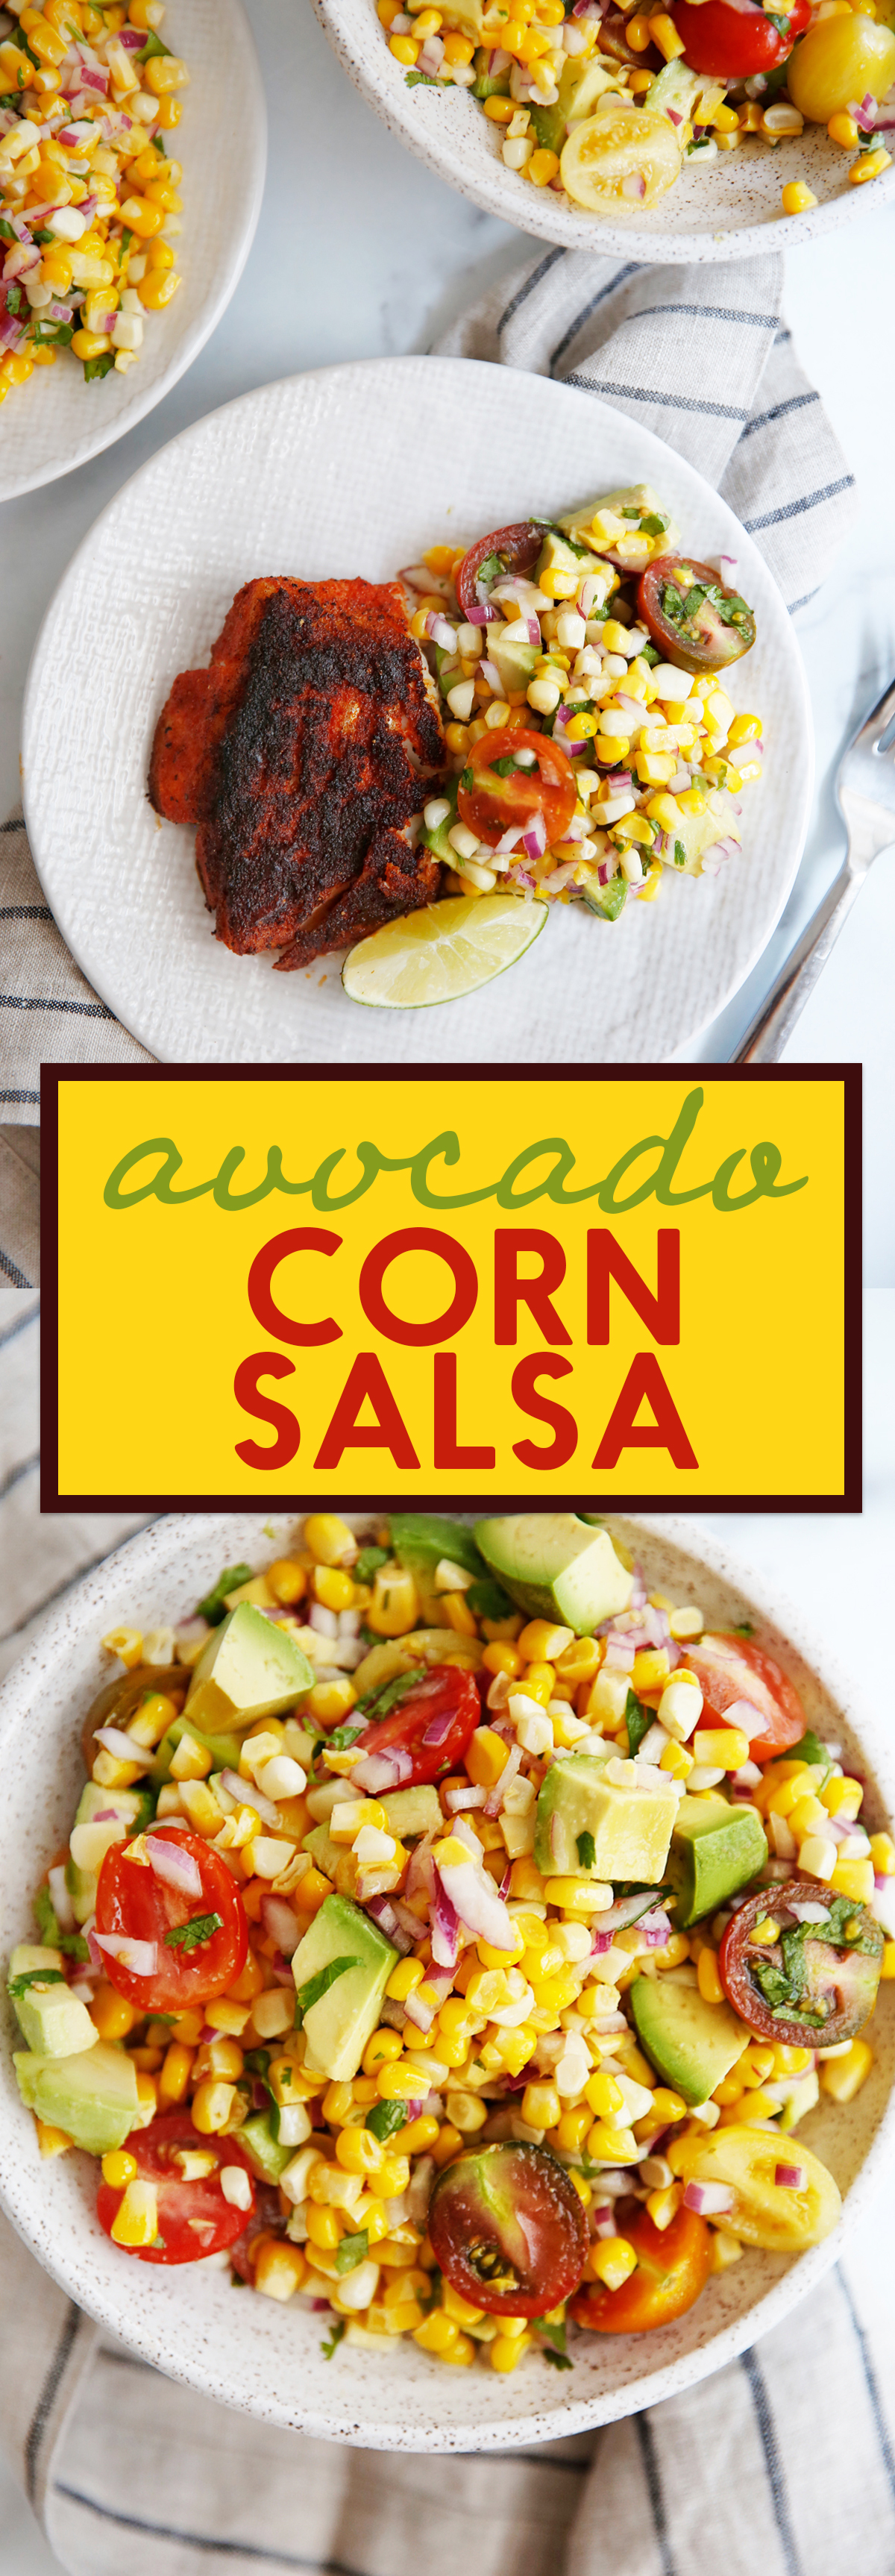 Avocado and Corn Salsa | Lexi's Clean Kitchen